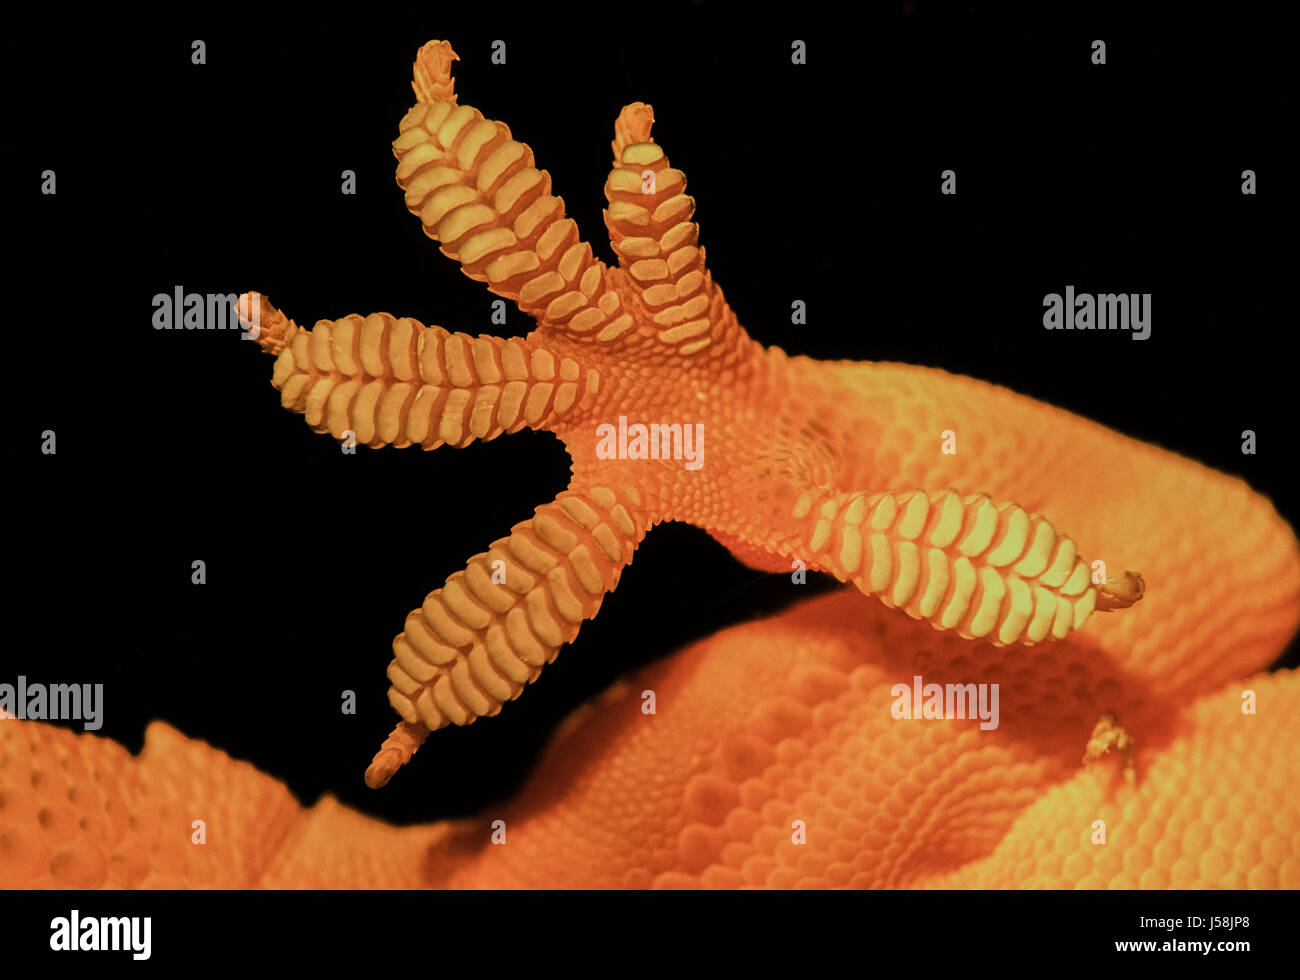 detail of Gecko foot and toes, Hemidactylus frenatus, on window pane, Rajasthan, India Stock Photo